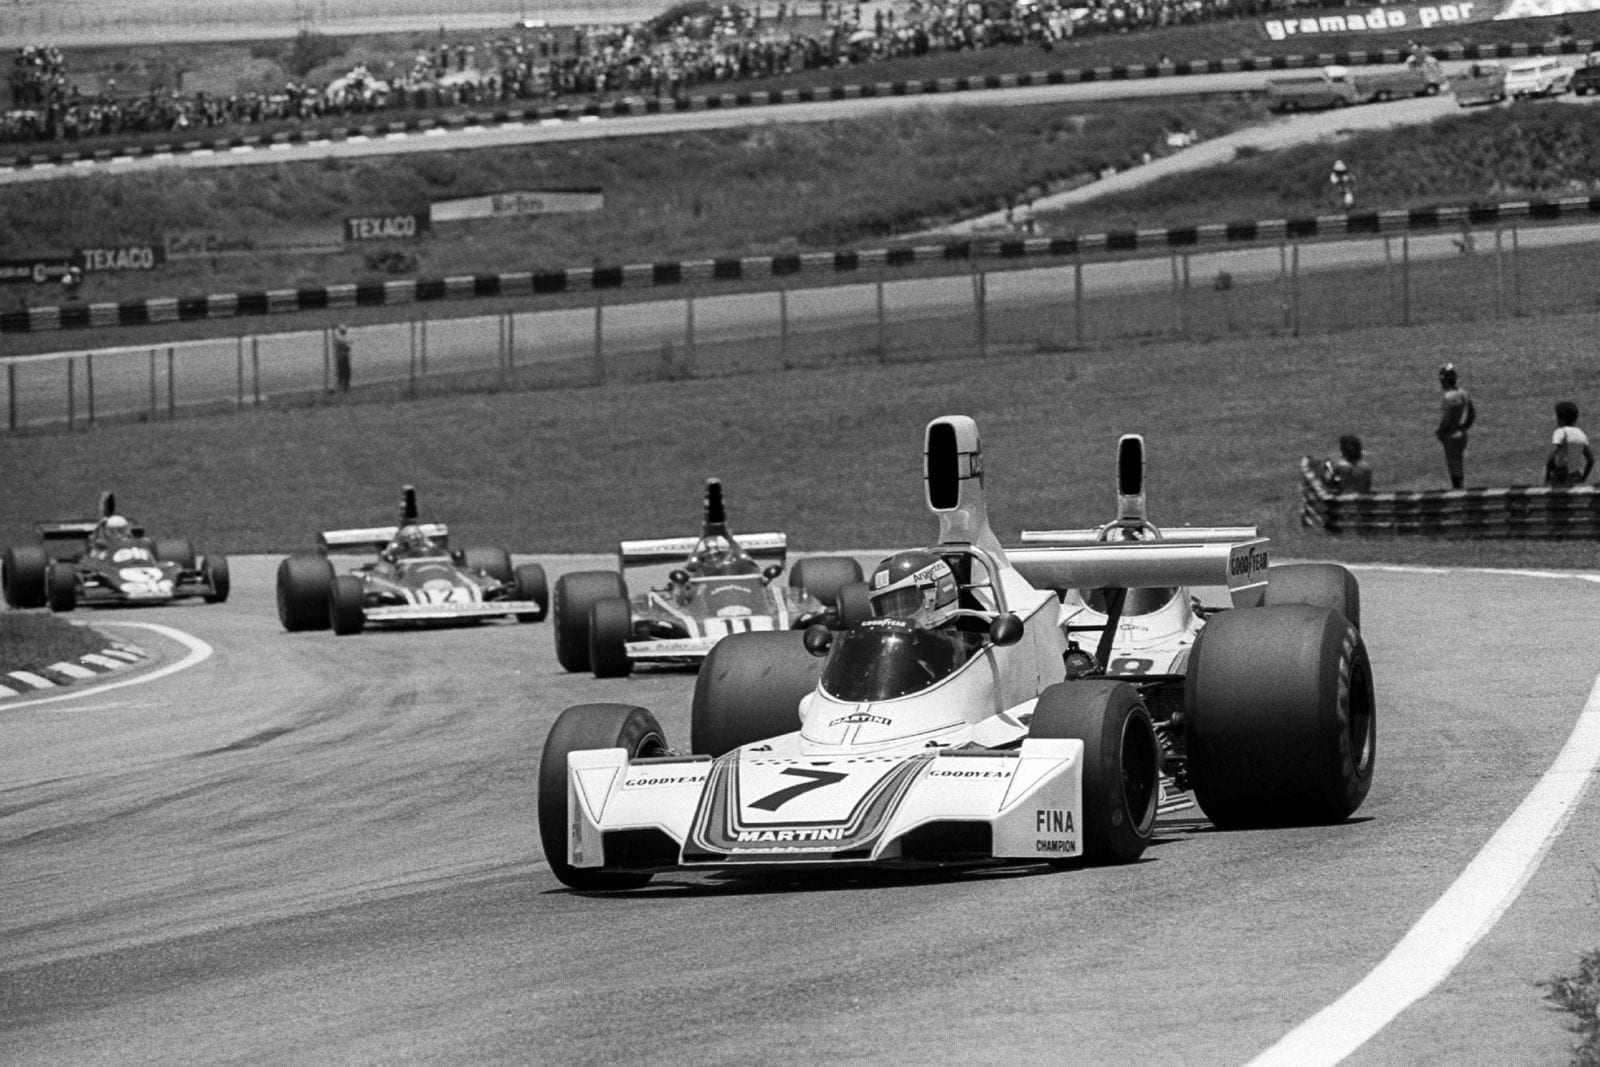 Brabham's Carlos Pace driving at the 1975 Brazilian Grand Prix, Interlagos.